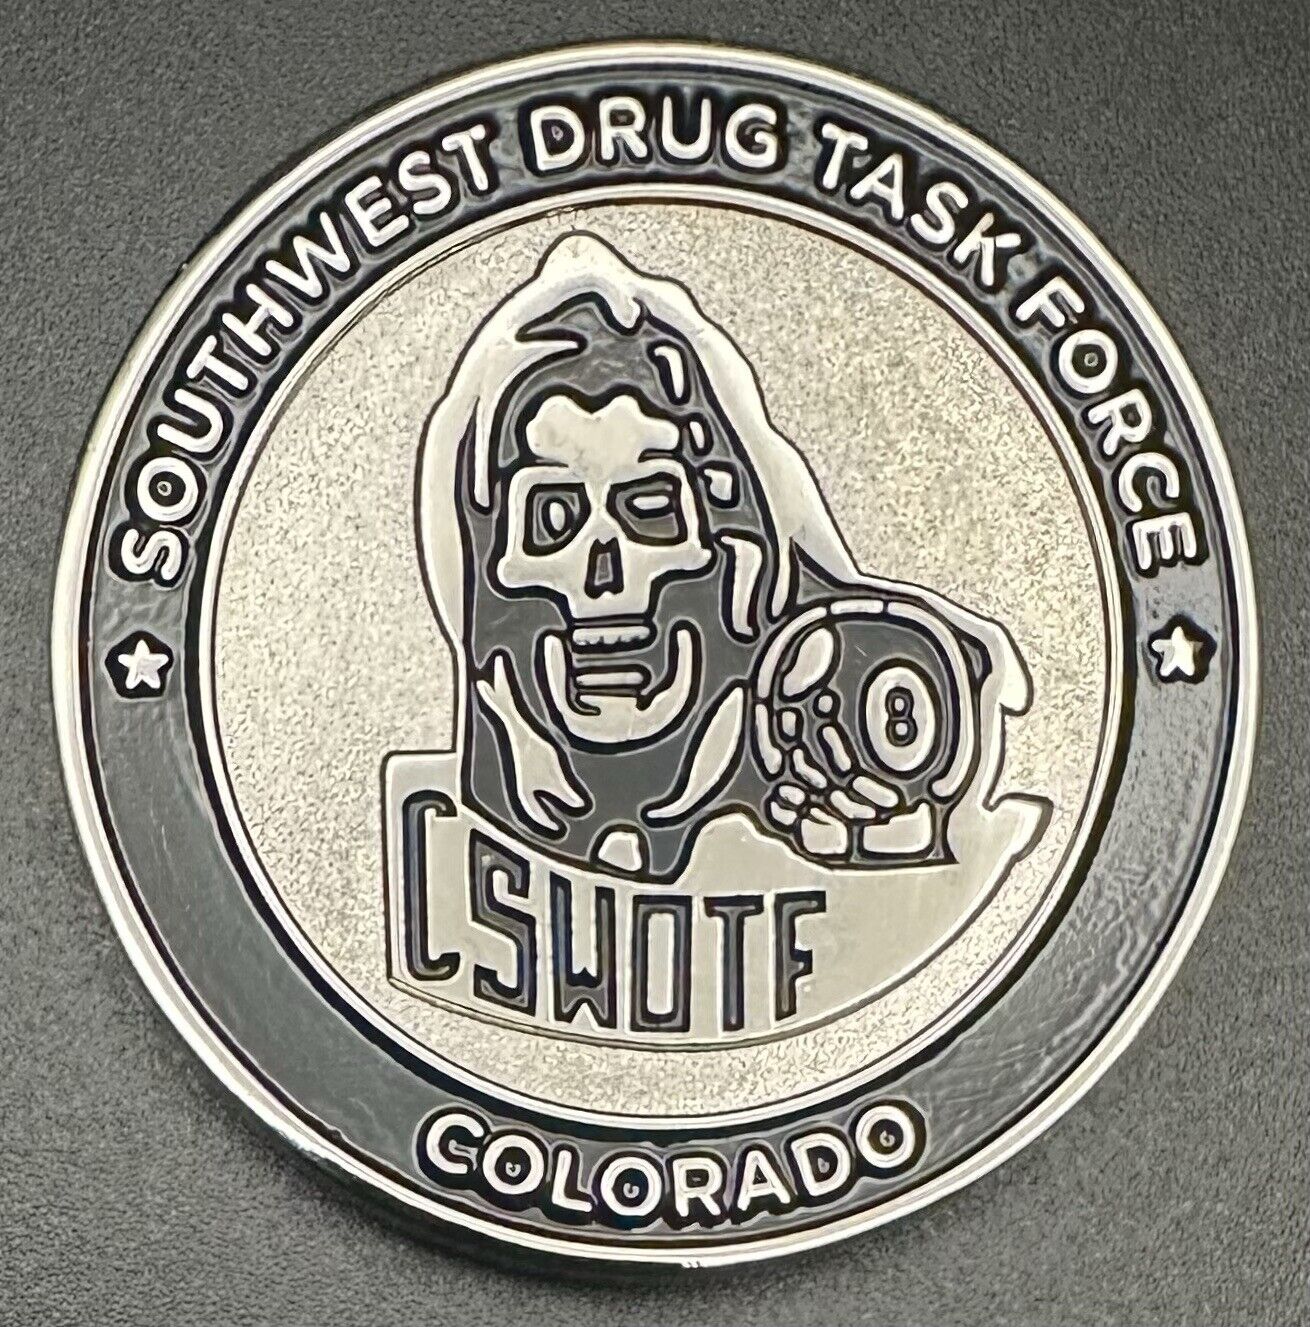 Colorado Southwest Drug Task Force ‘Operation Cannoli Joe’ Police Reaper Coin